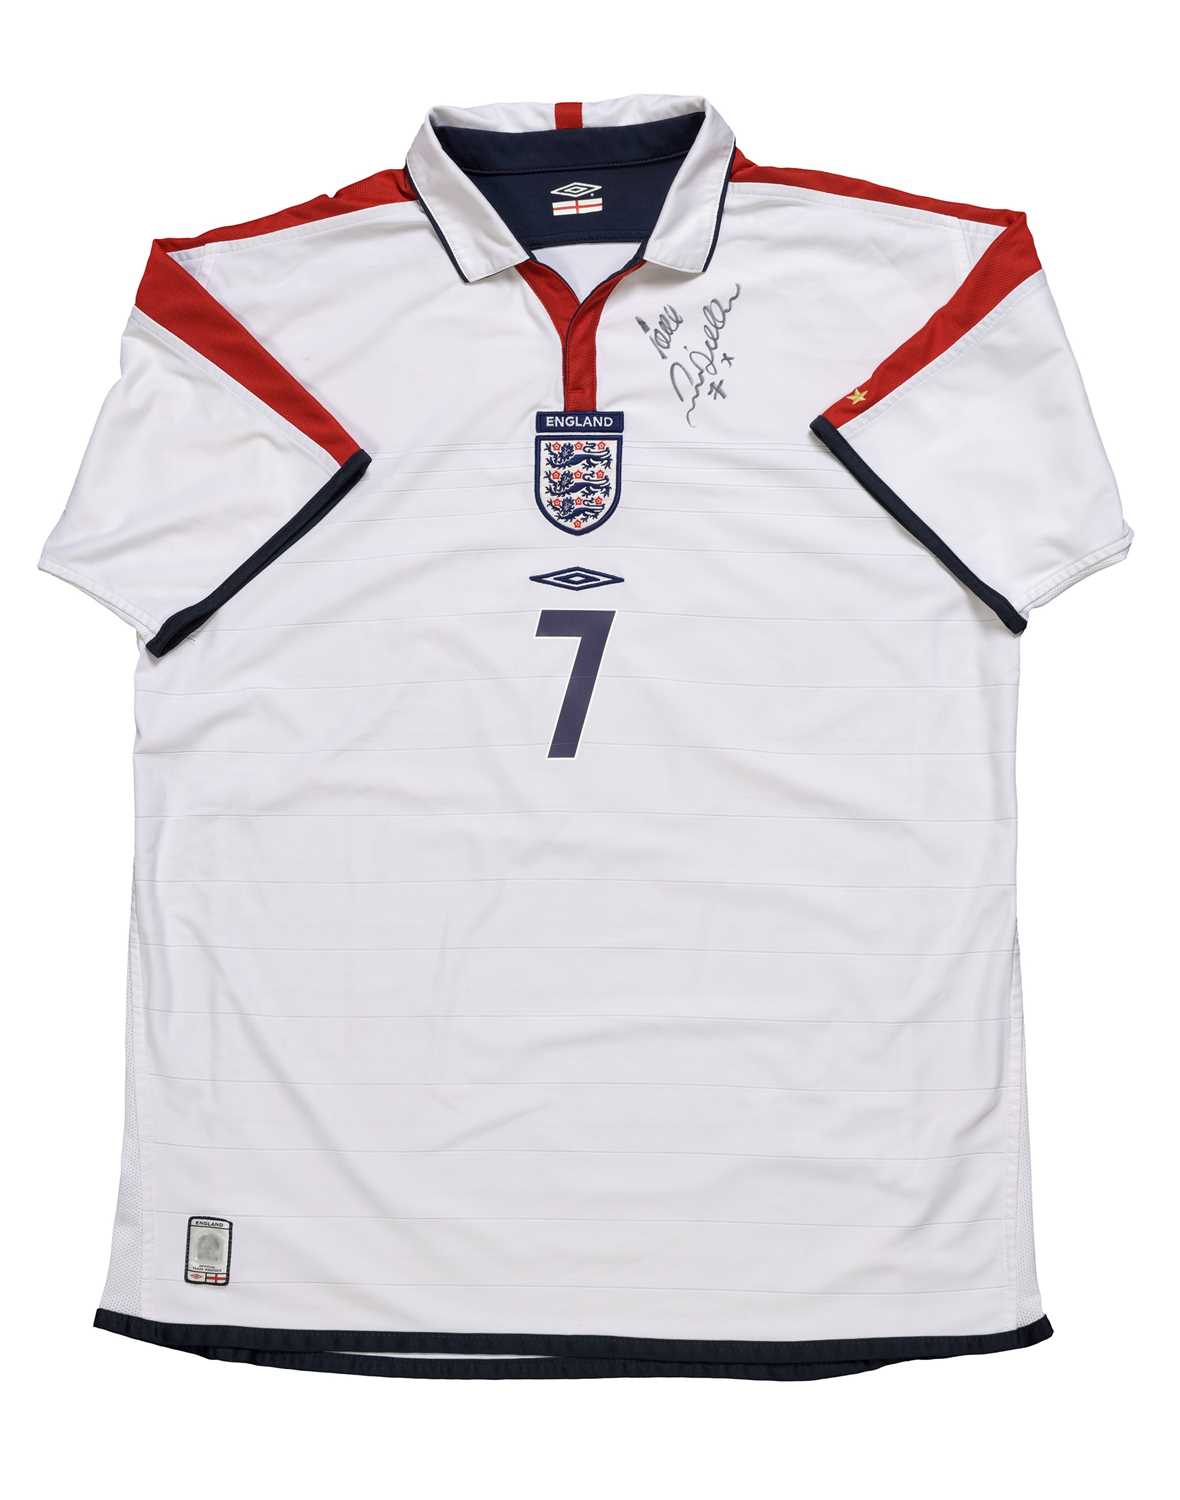 David Beckham Signed Vintage England Shirt 2003-2005 A signed vintage England shirt from David - Image 4 of 4